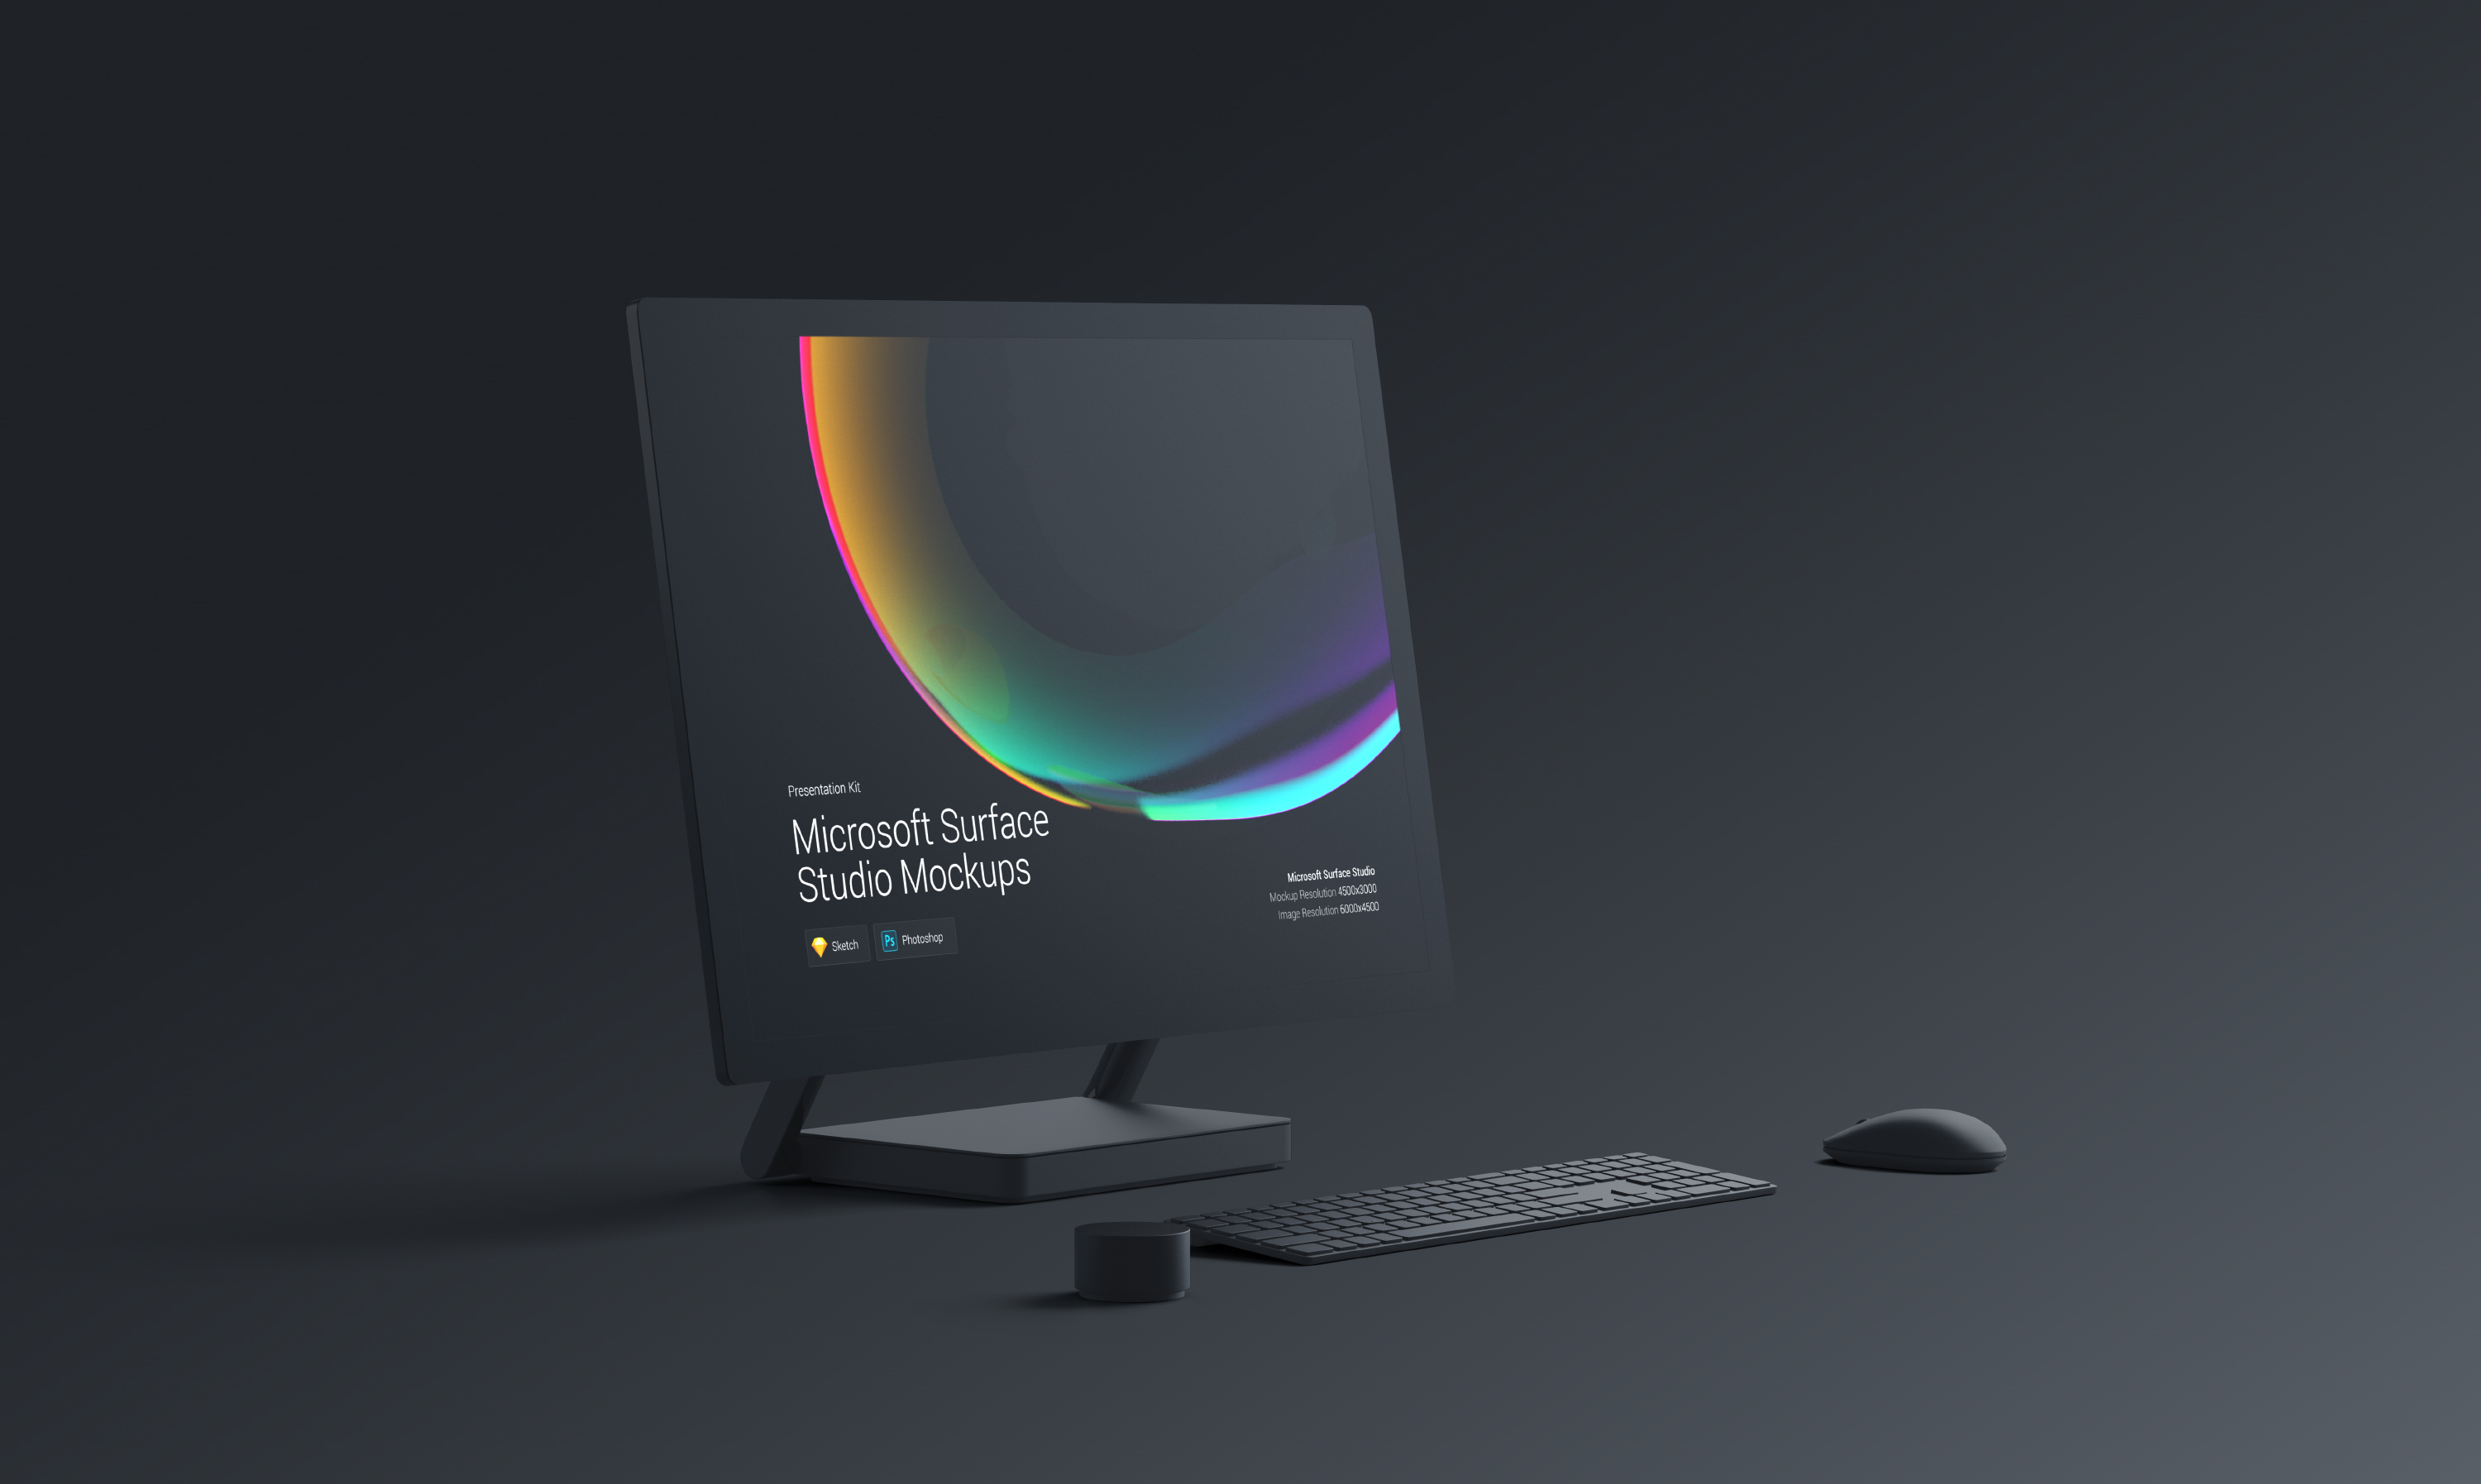 Microsoft Surface Studio Mockups by Ruslanlatypov for ls.graphics on Dribbble